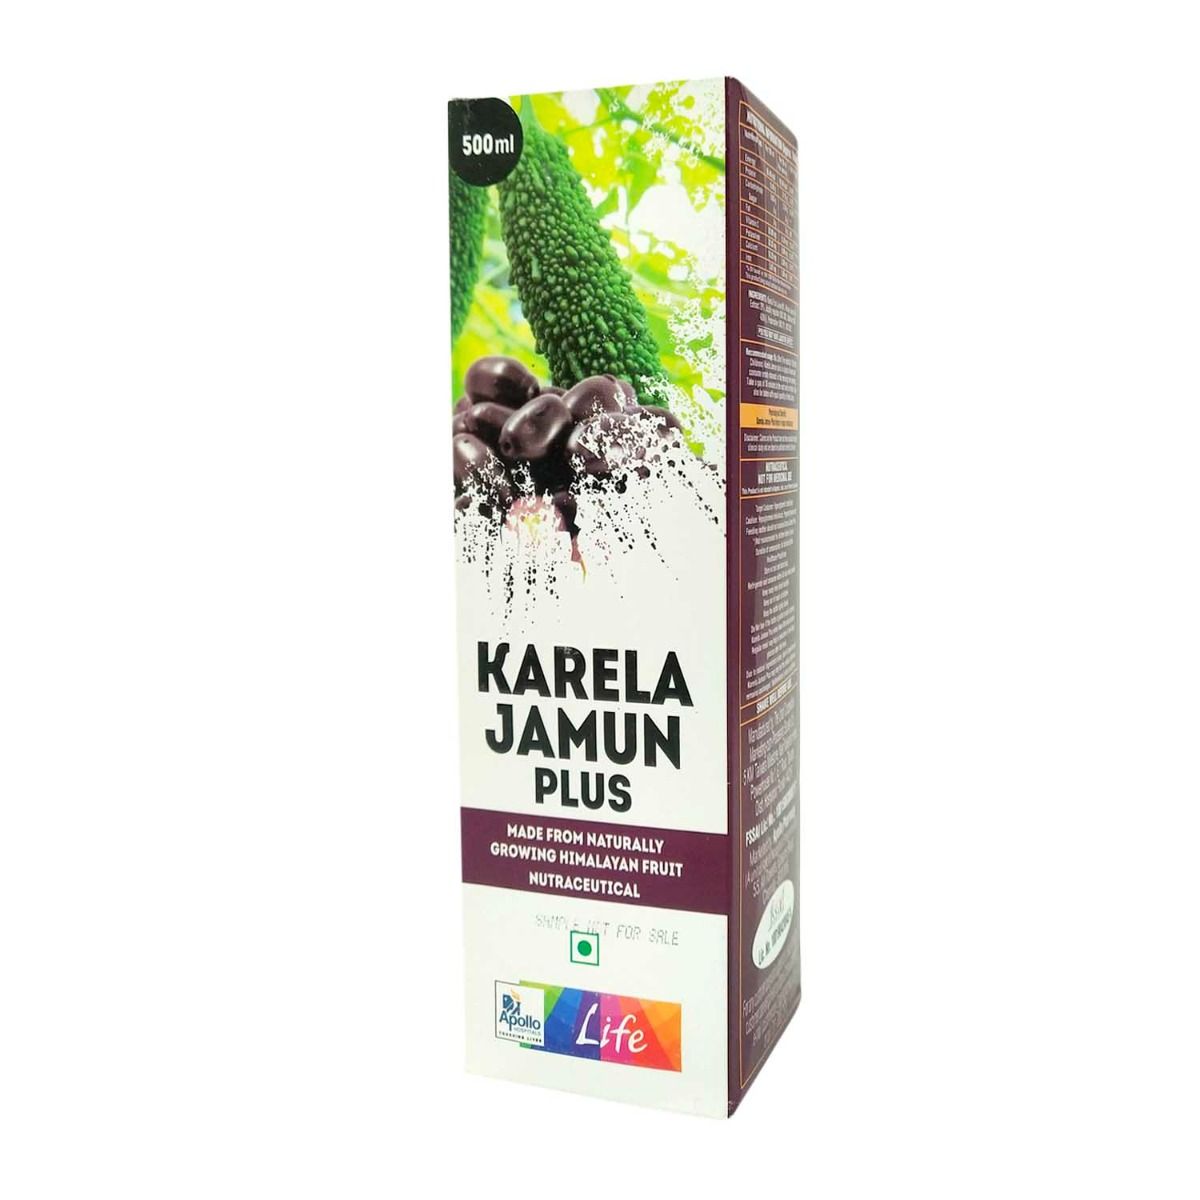 Apollo Life Karela Jamun Plus Juice, 500 ml, Pack of 1 